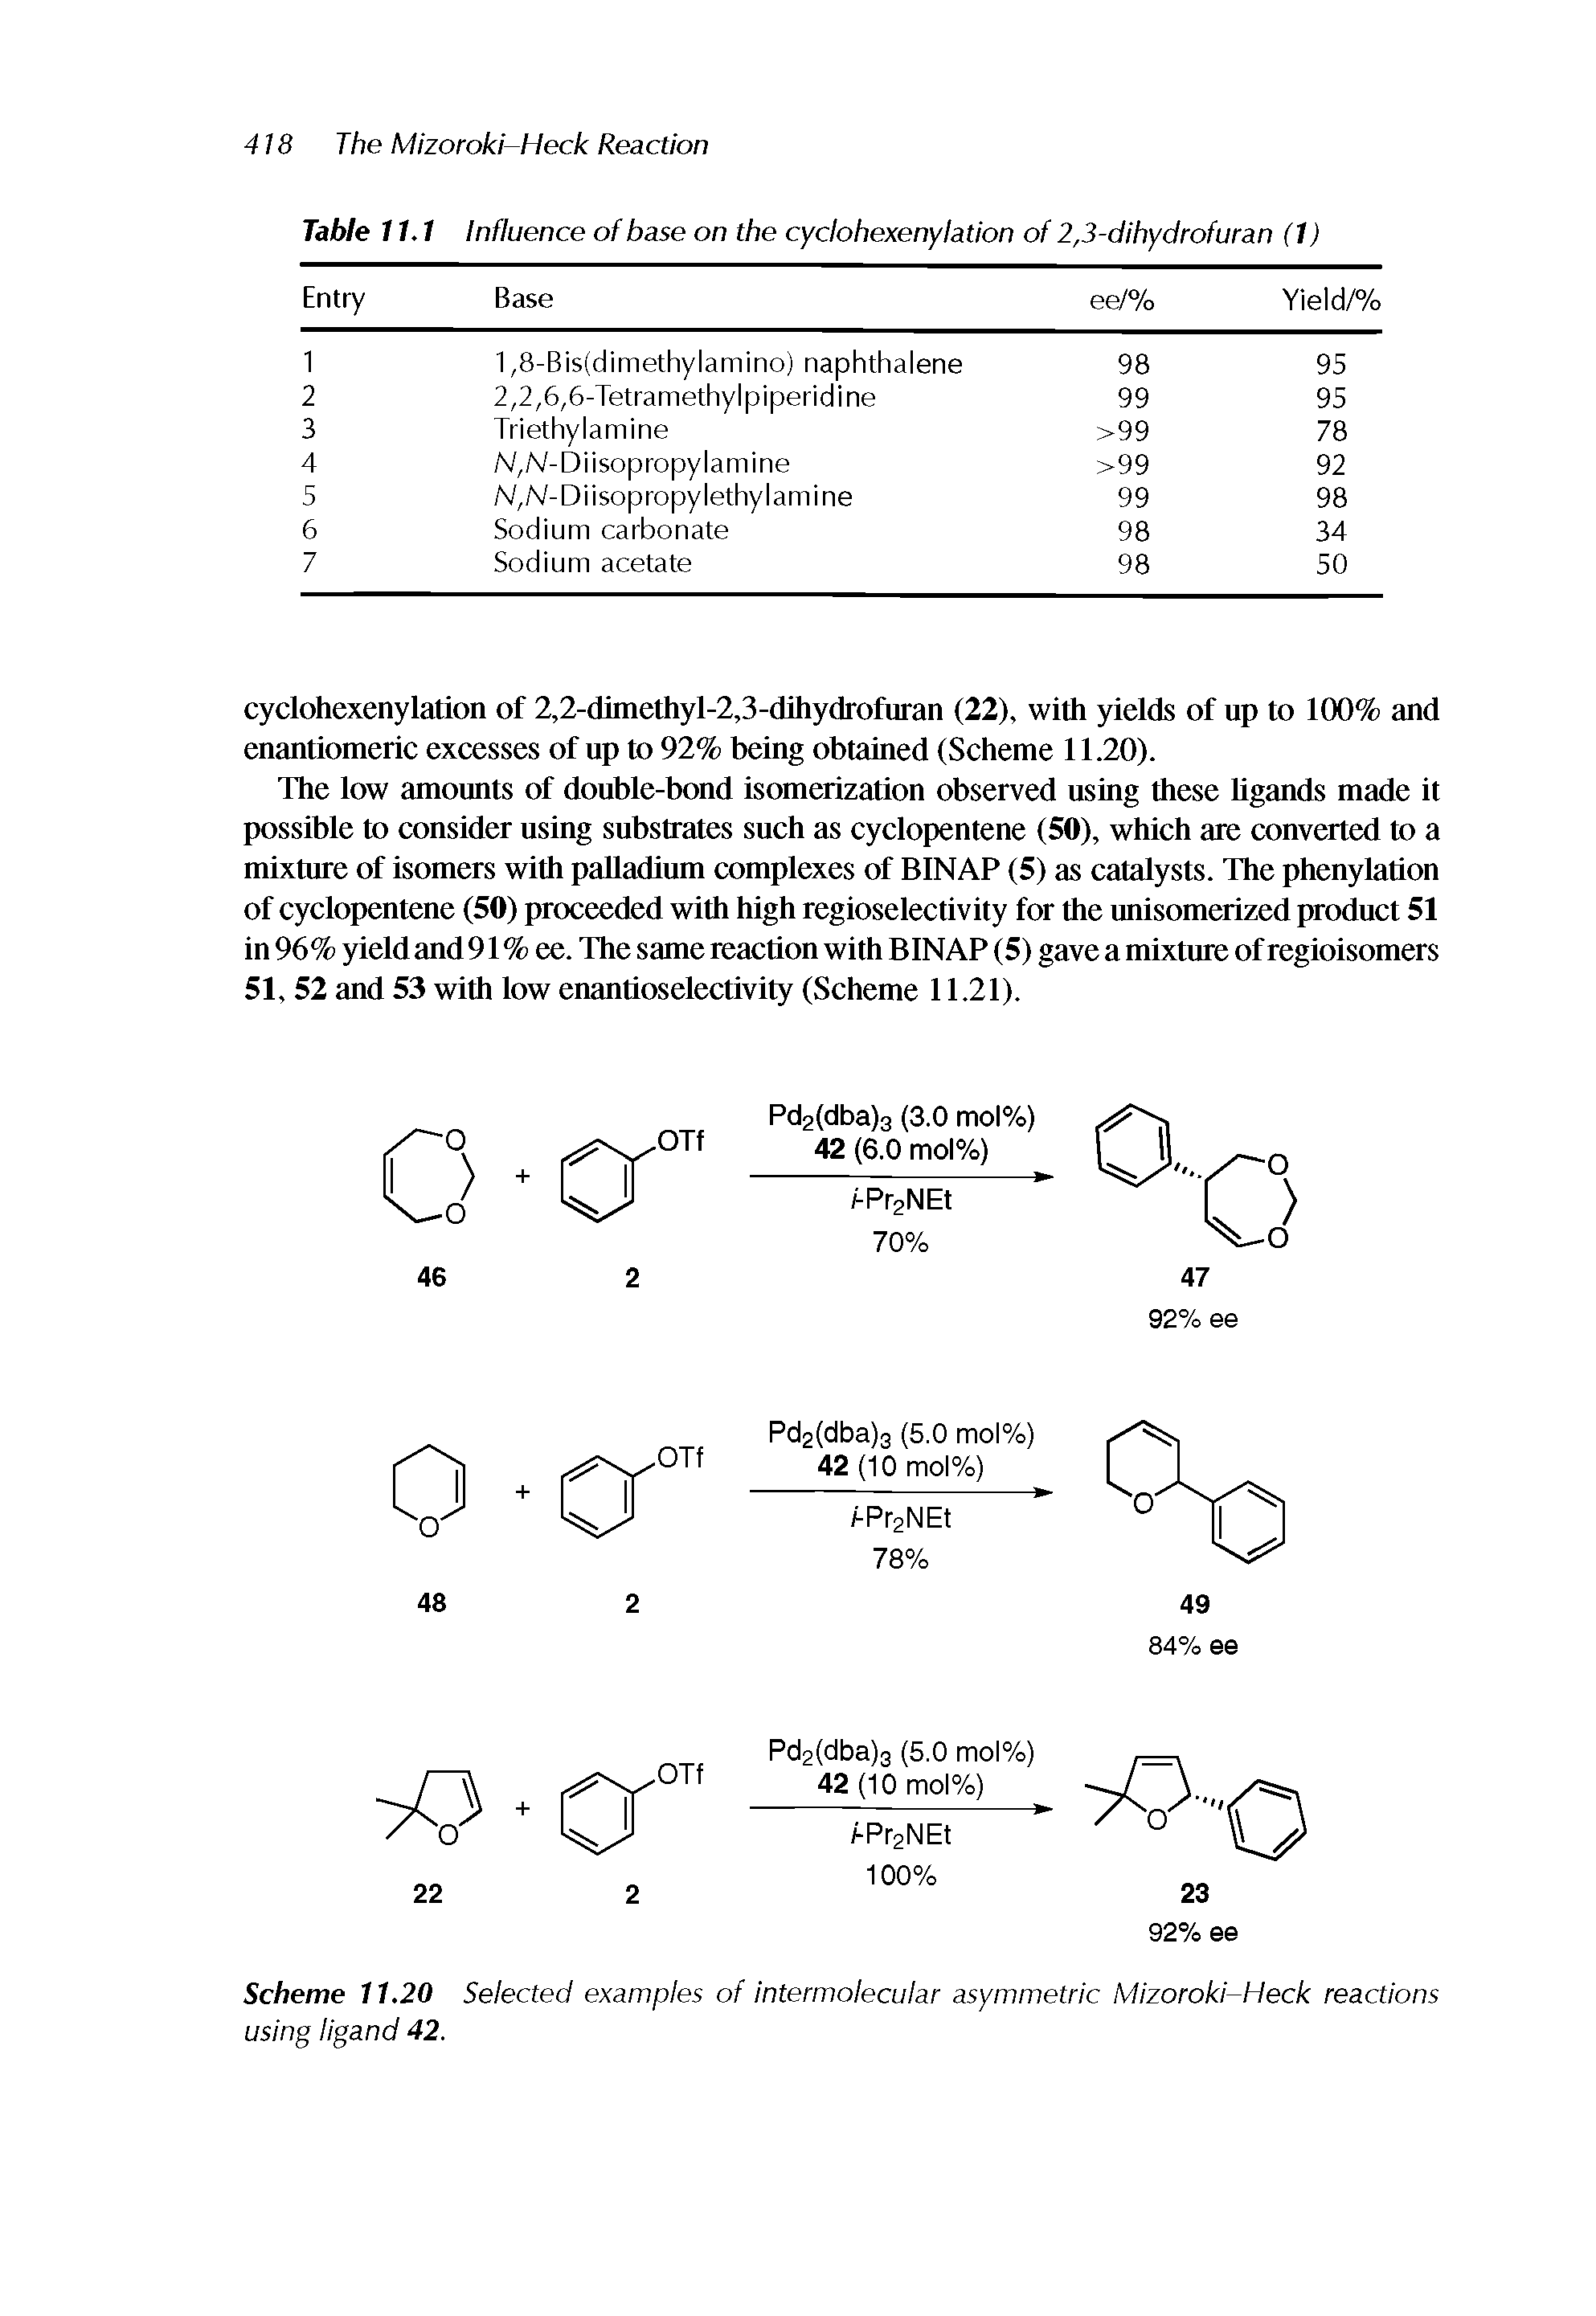 Scheme 11.20 Selected examples of Intermolecular asymmetric MIzoroki-Heck reactions using ligand 42.